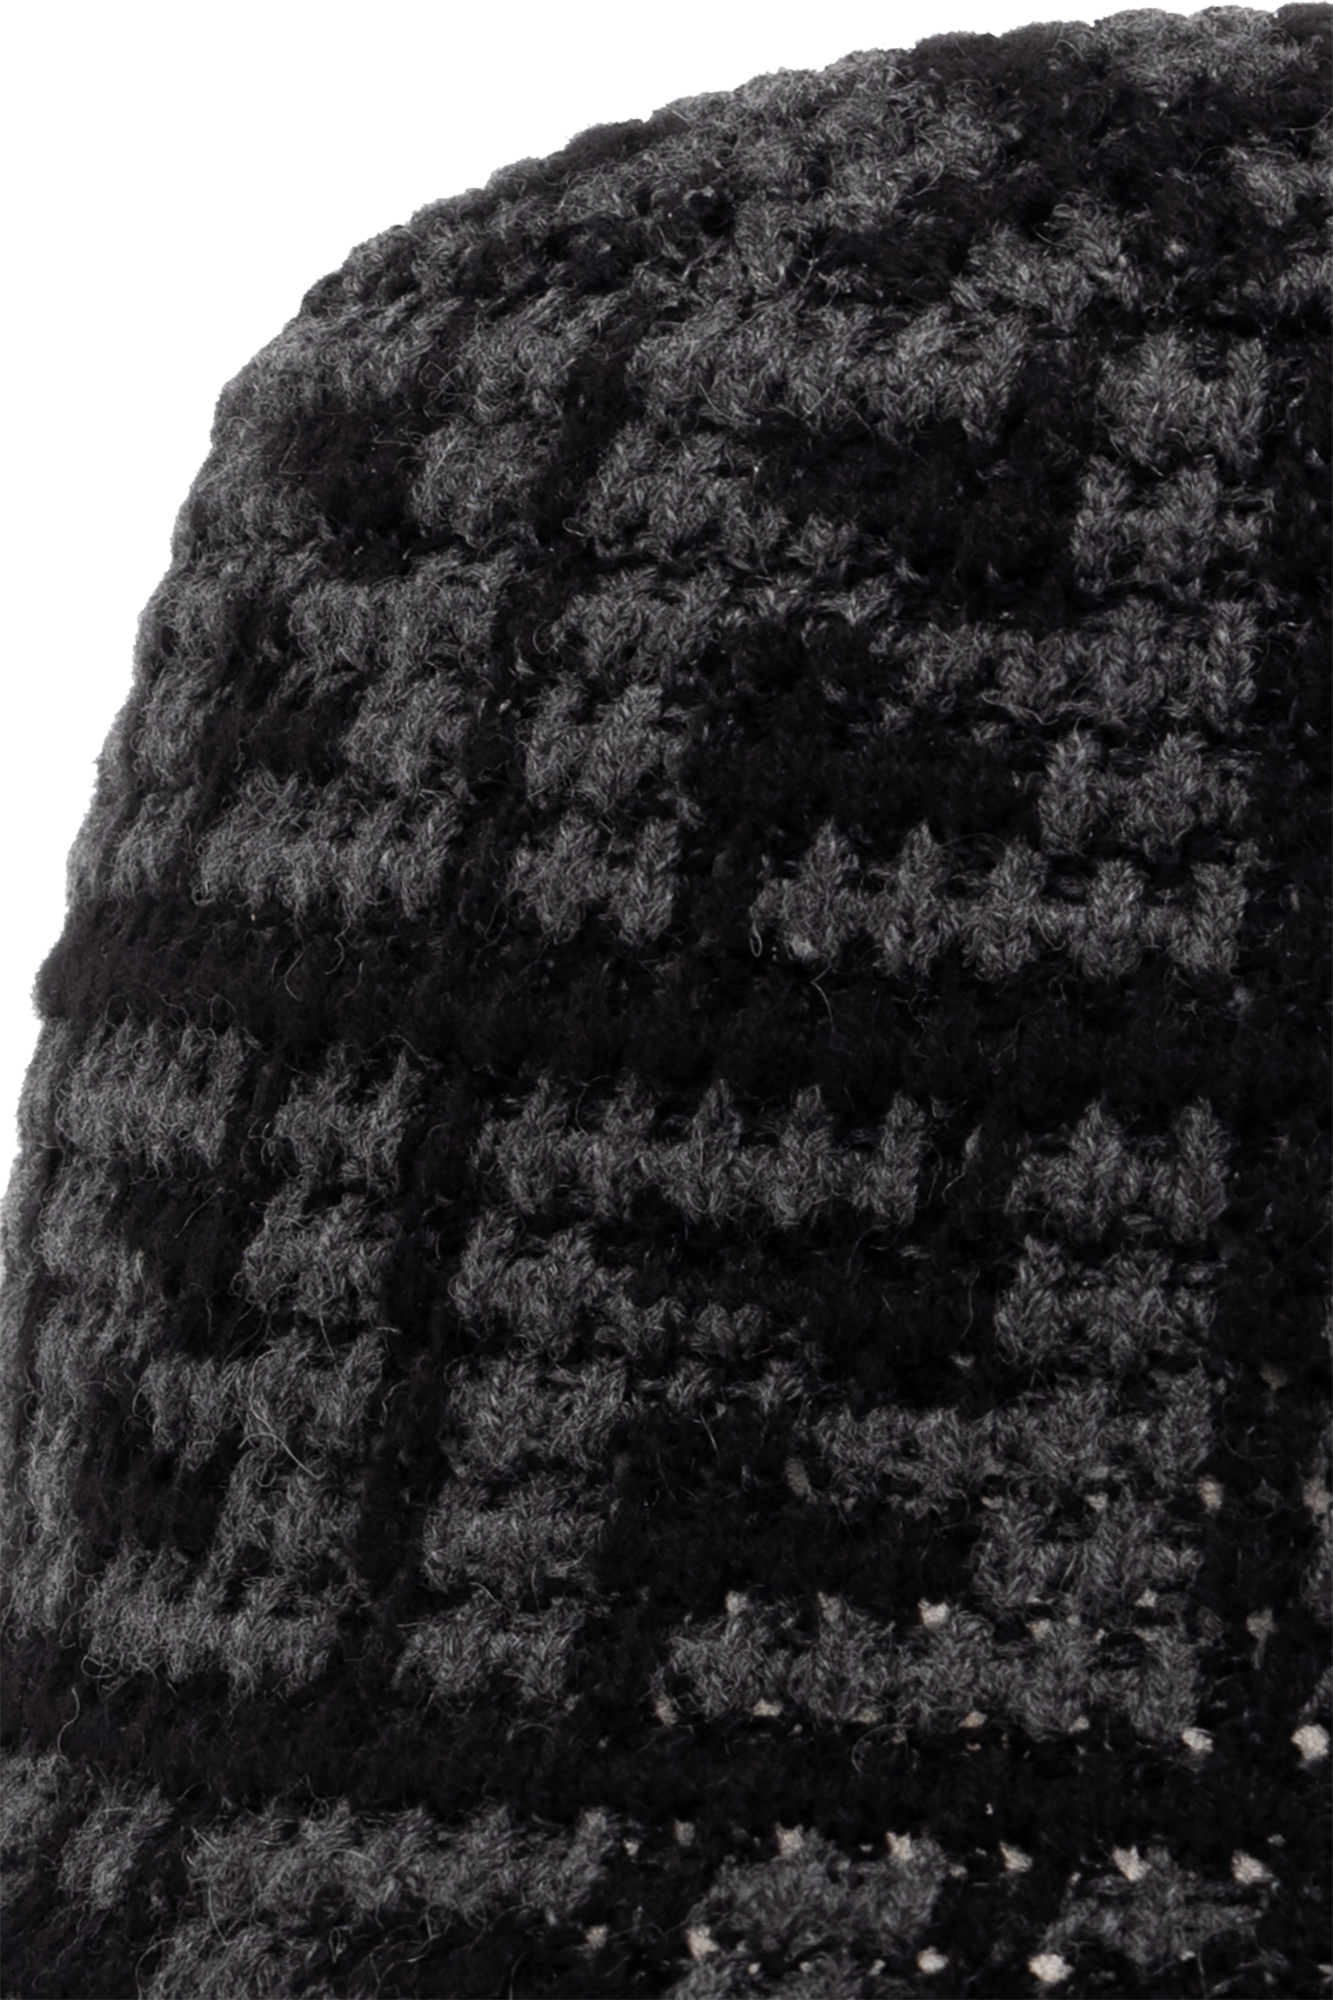 Wool beanie Louis Vuitton Black size Not specified International